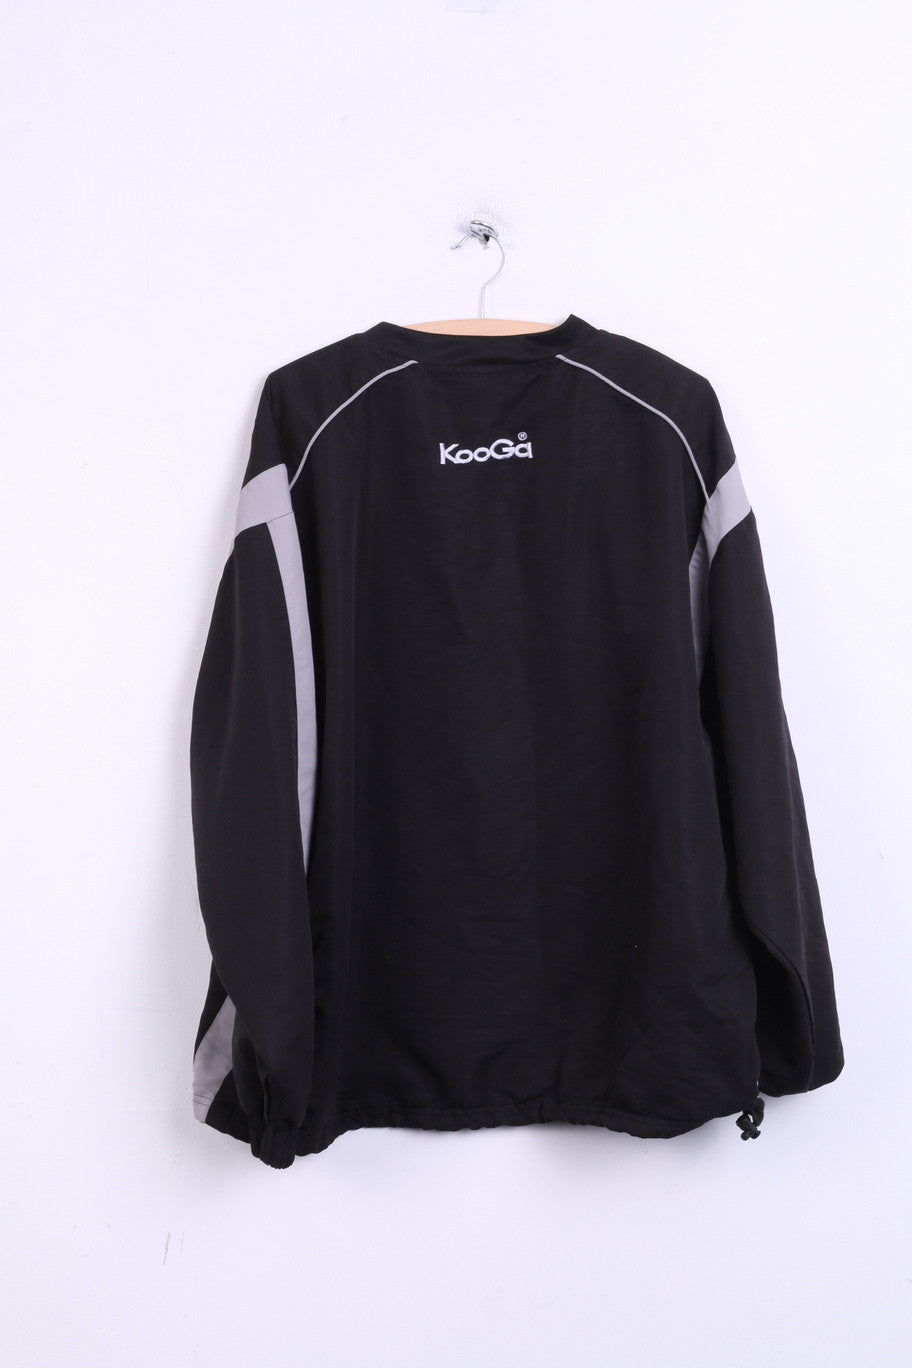 Kooga ORRUFC Mens 2XL Sweatshirt Black Rugby Sport Sheard Packaging - RetrospectClothes